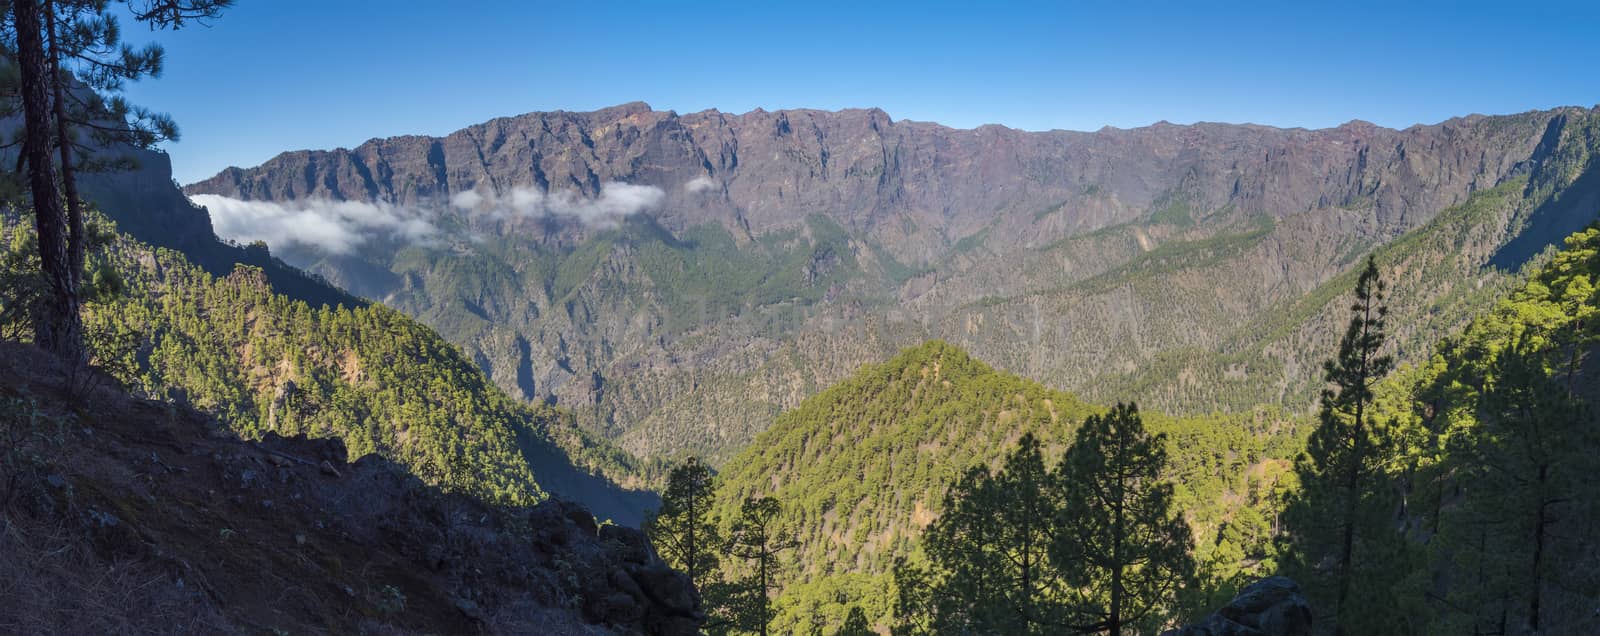 Panoramic volcanic landscape and lush pine tree forest, pinus canariensis view from Mirador de la Cumbrecita at national park Caldera de Taburiente, volcanic crater in La Palma, Canary Islands, Spain.